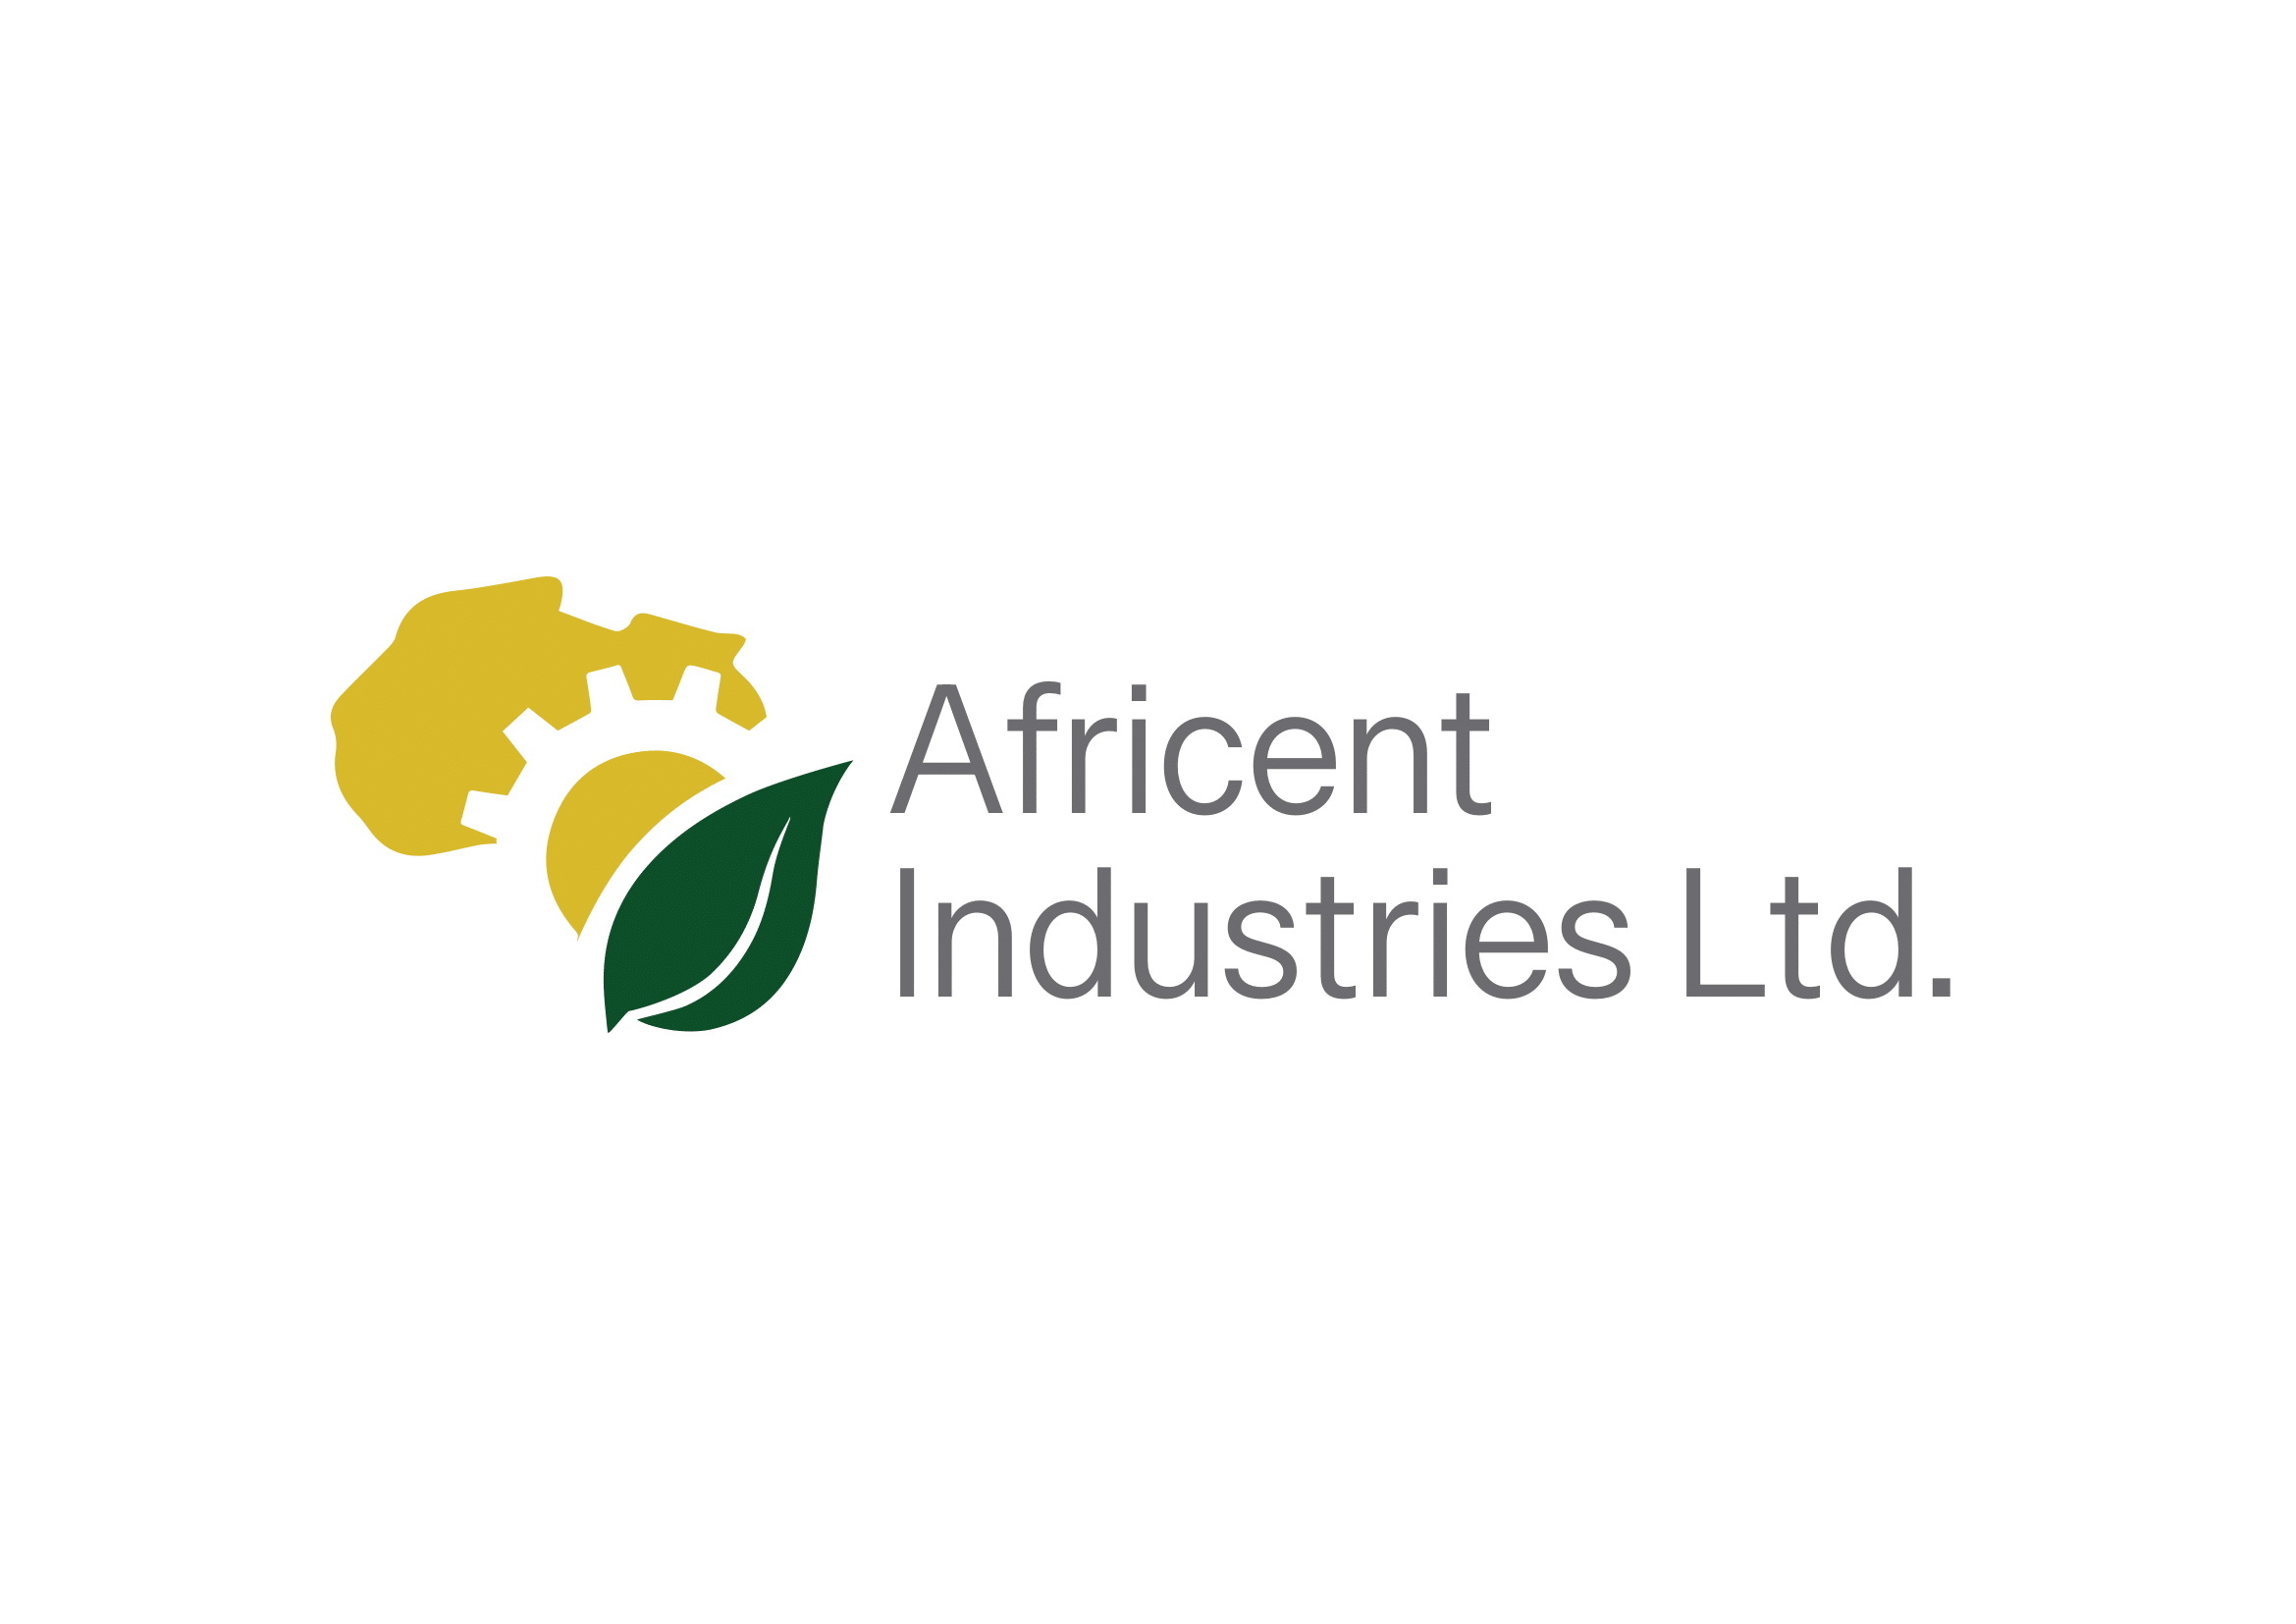 Africent Industries